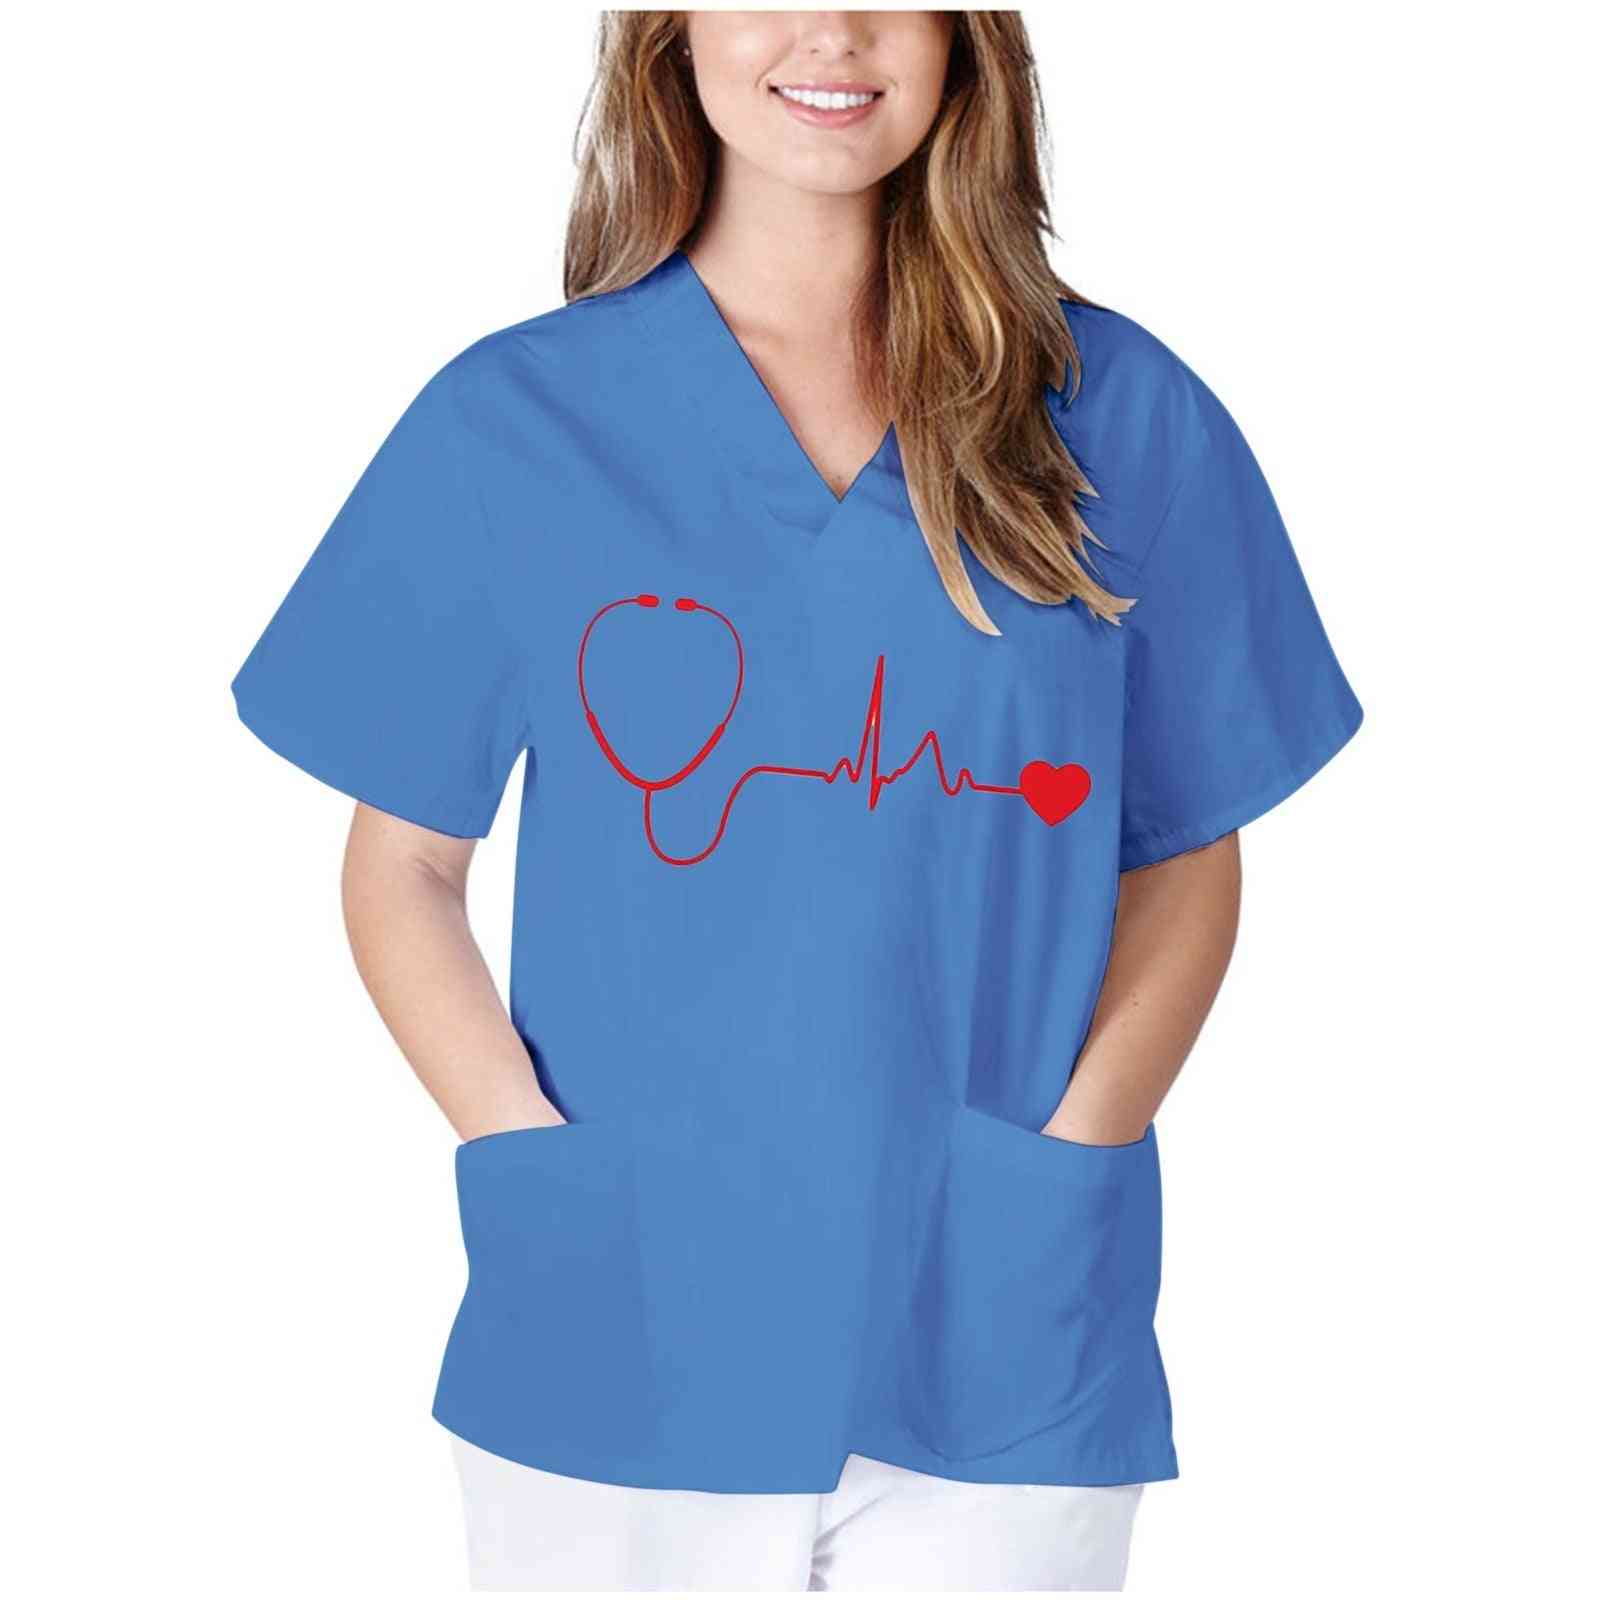 Women Shirts Tops Short Sleeve V-neck Tops Nursing Working Uniform